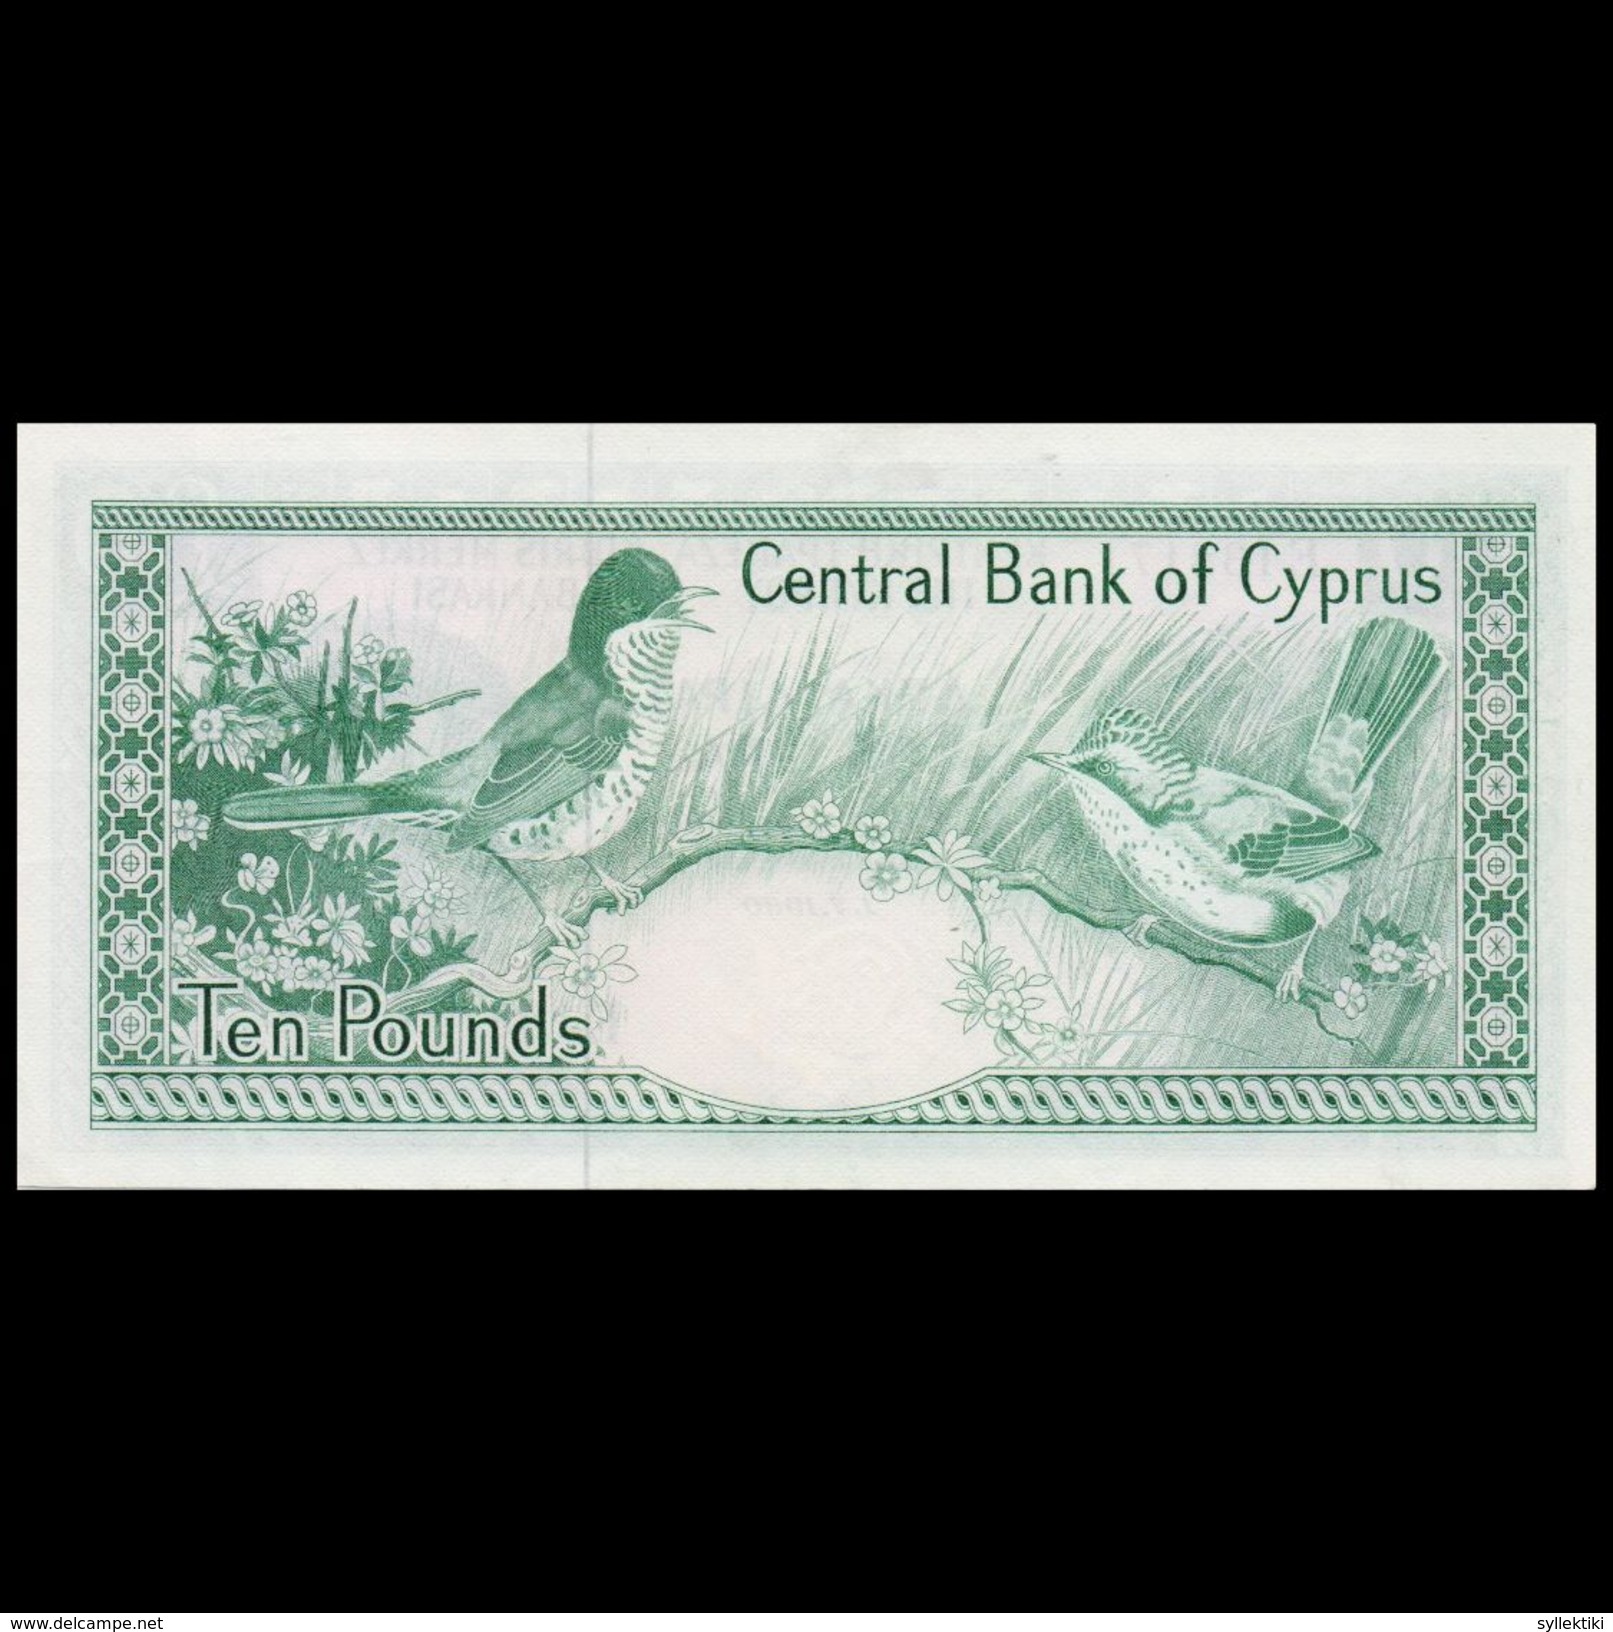 CYPRUS 1980 TEN POUNDS BANKNOTE AUNC - Chipre